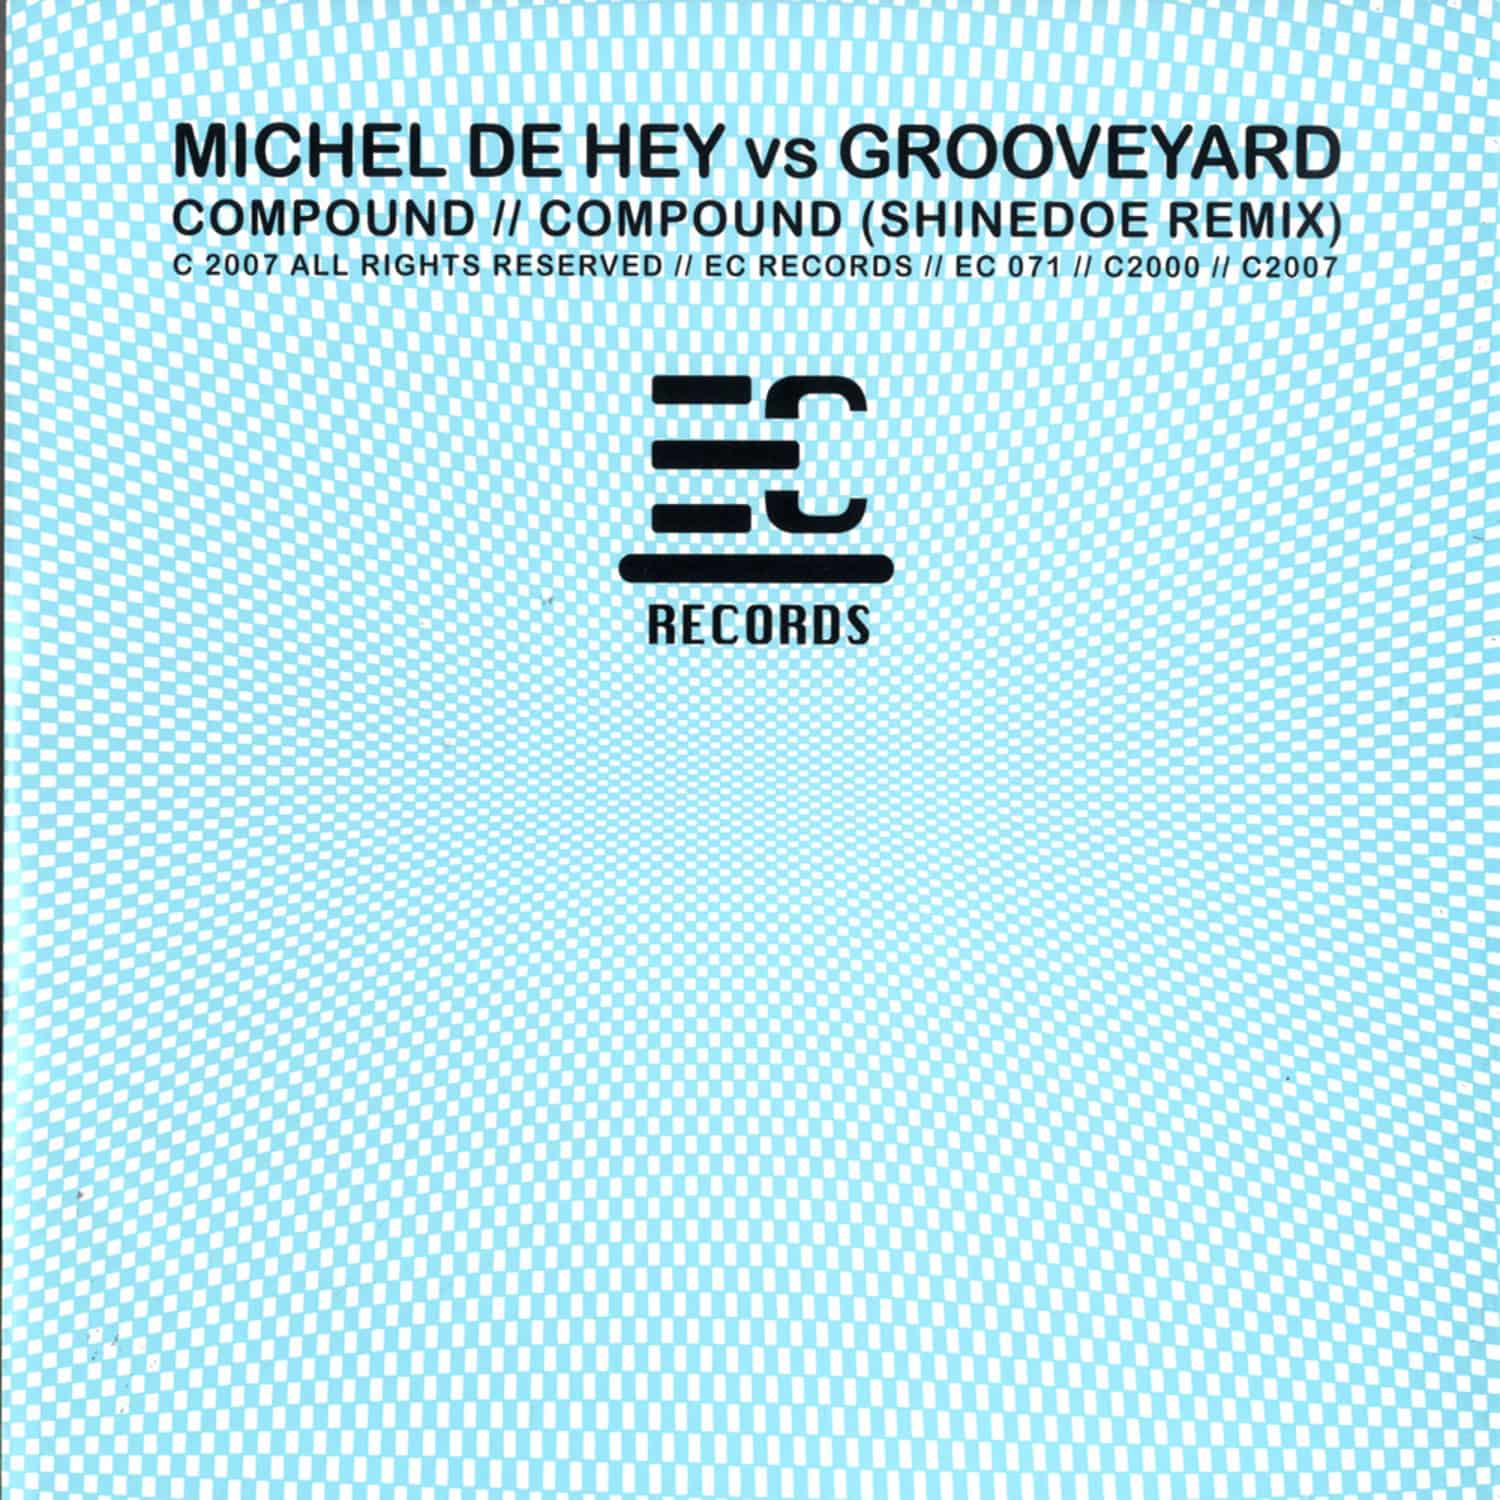 Michel De Hey vs Grooveyard - COMPOUND - SHINEDOE REMIX